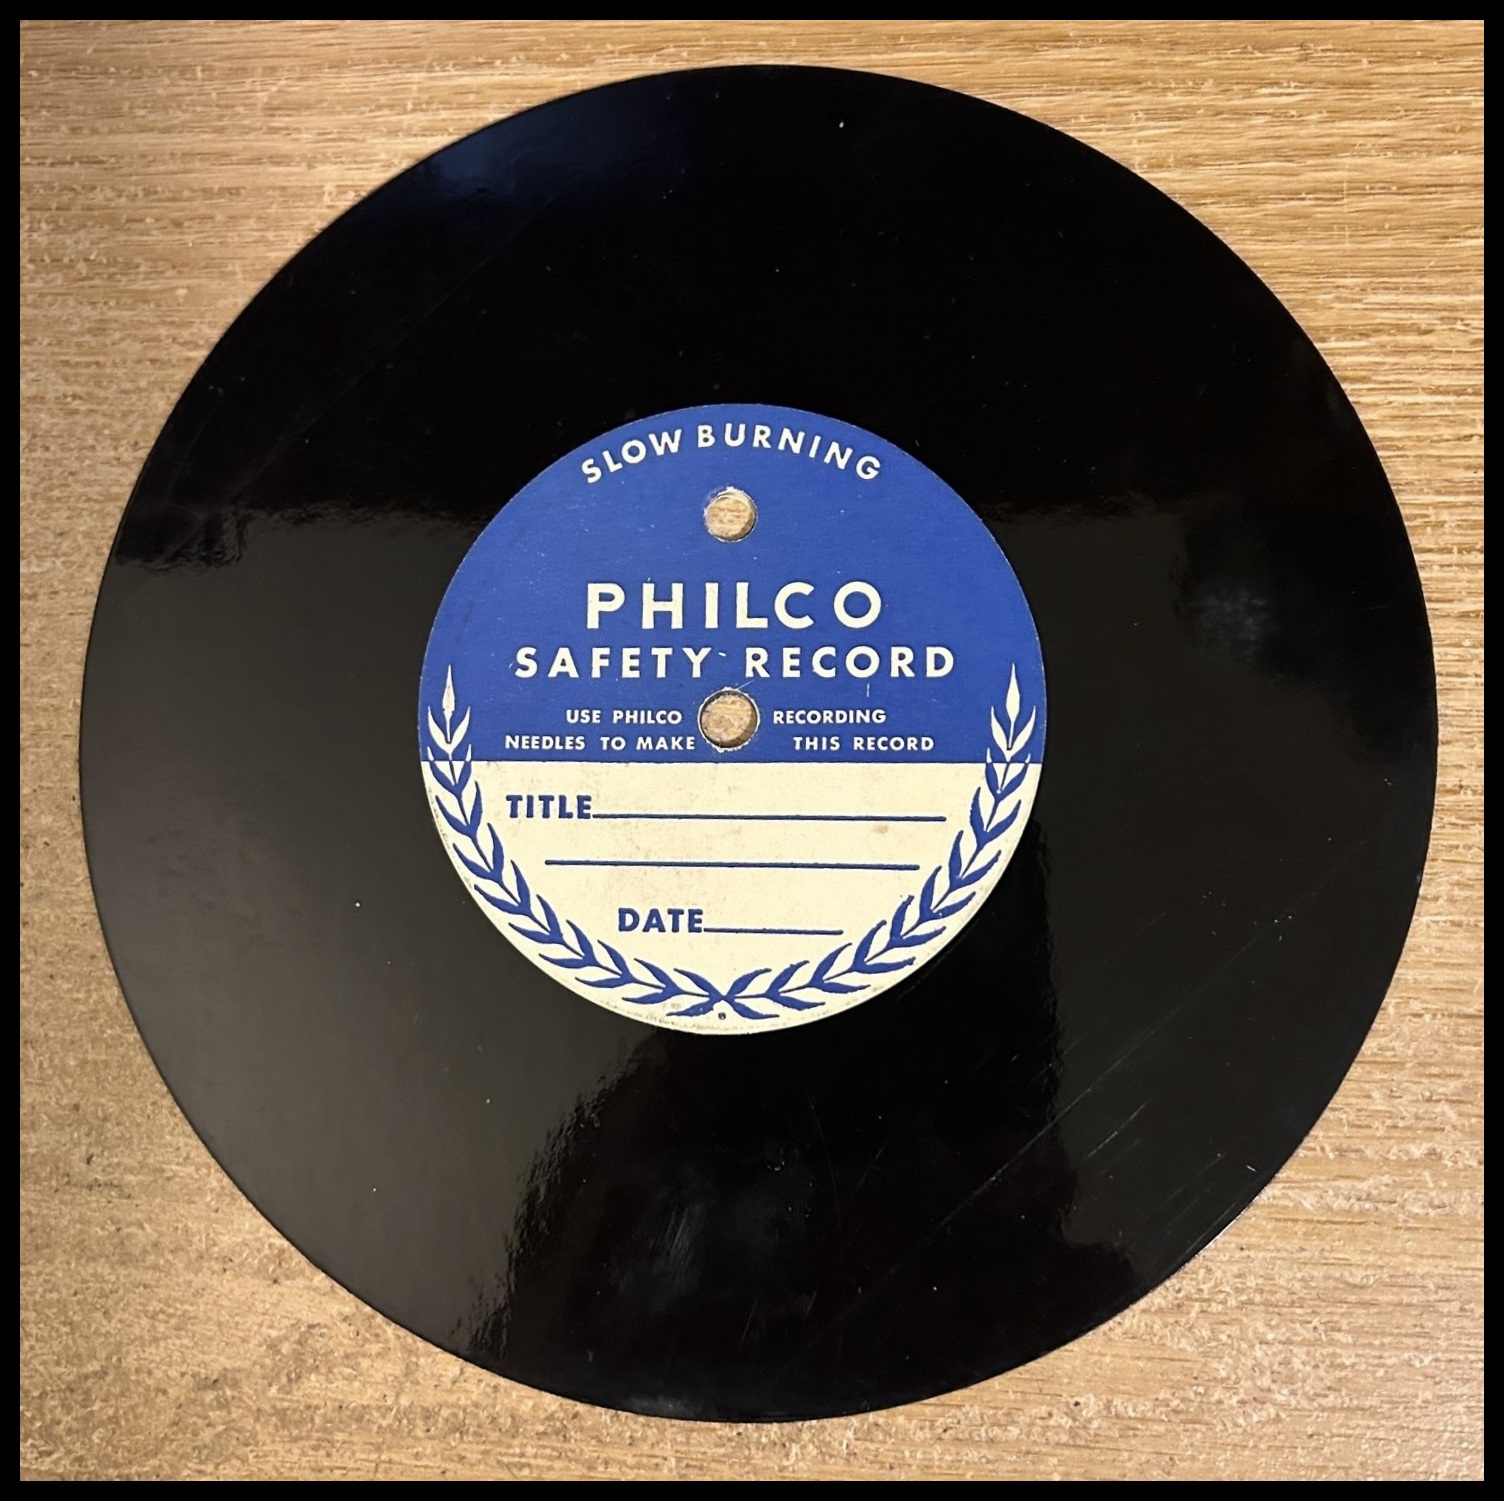 Slow burning Philco Safety Record, WW2 era vinyl, NFSB, Thrift Shop, Nutley Museum, Nutley Historical Society, Nutley NJ